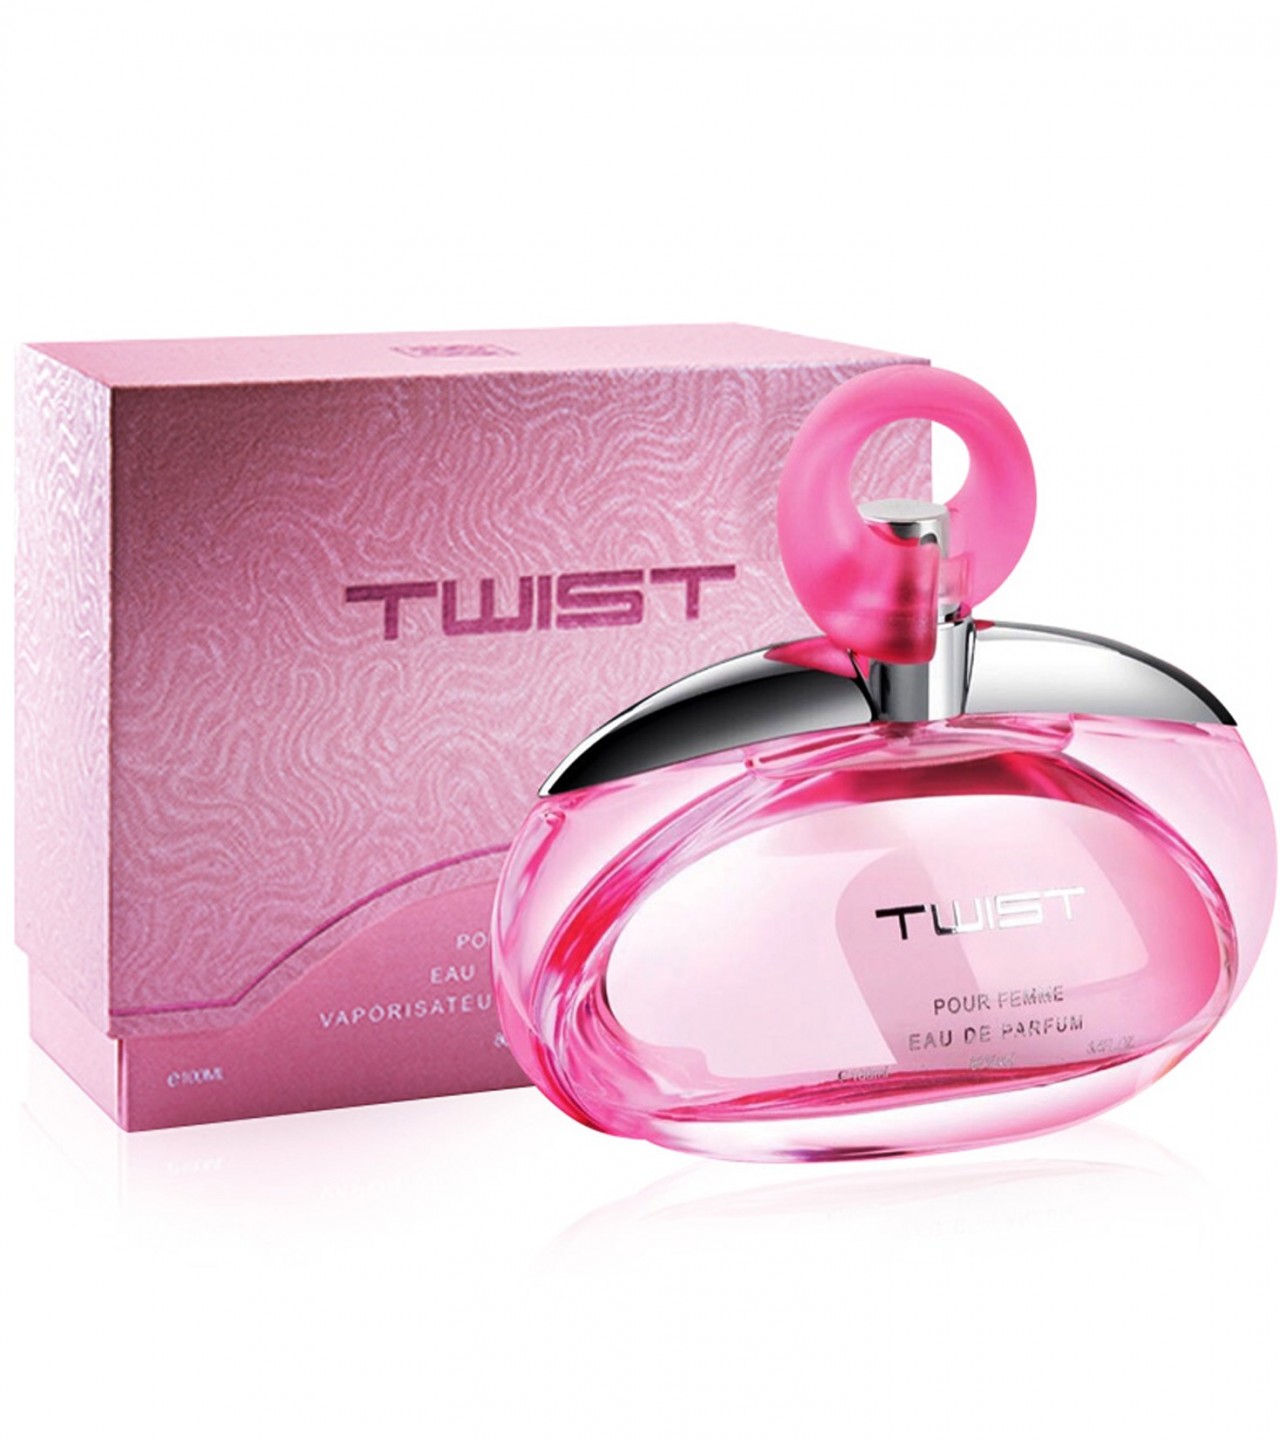 Emper Twist Perfume For Women - 100 ml